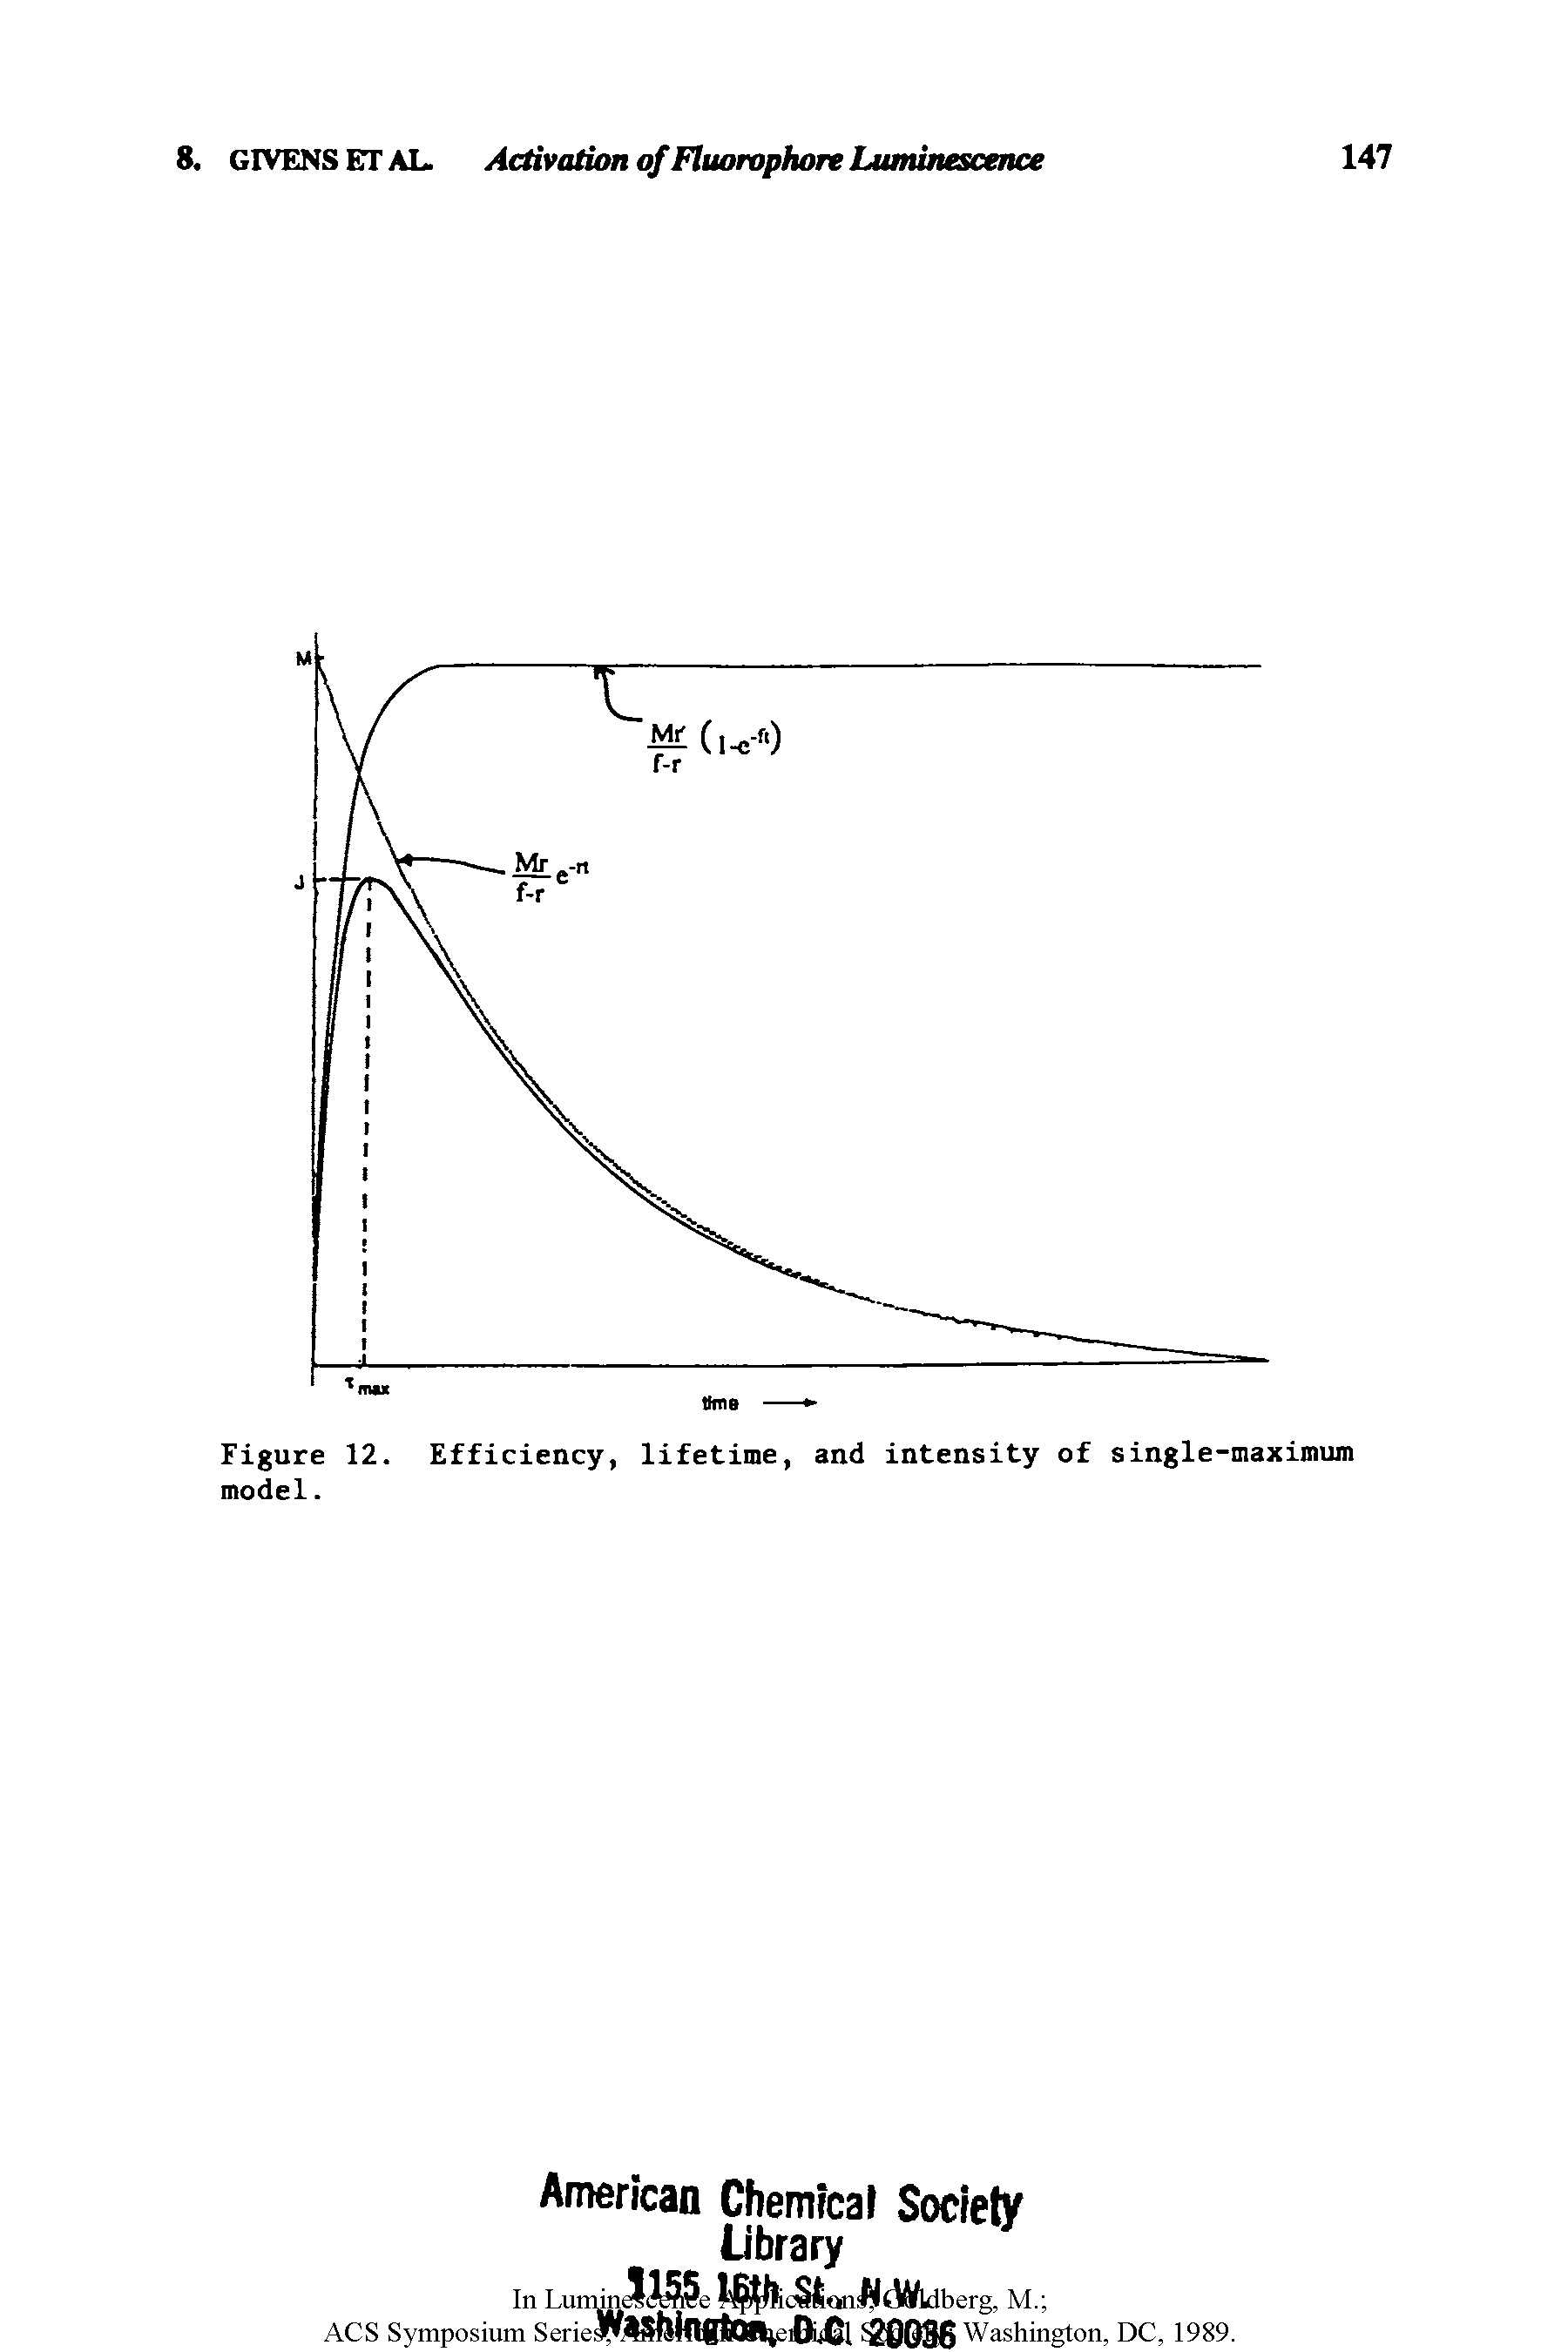 Figure 12. Efficiency, lifetime, and intensity of single-maximum model.